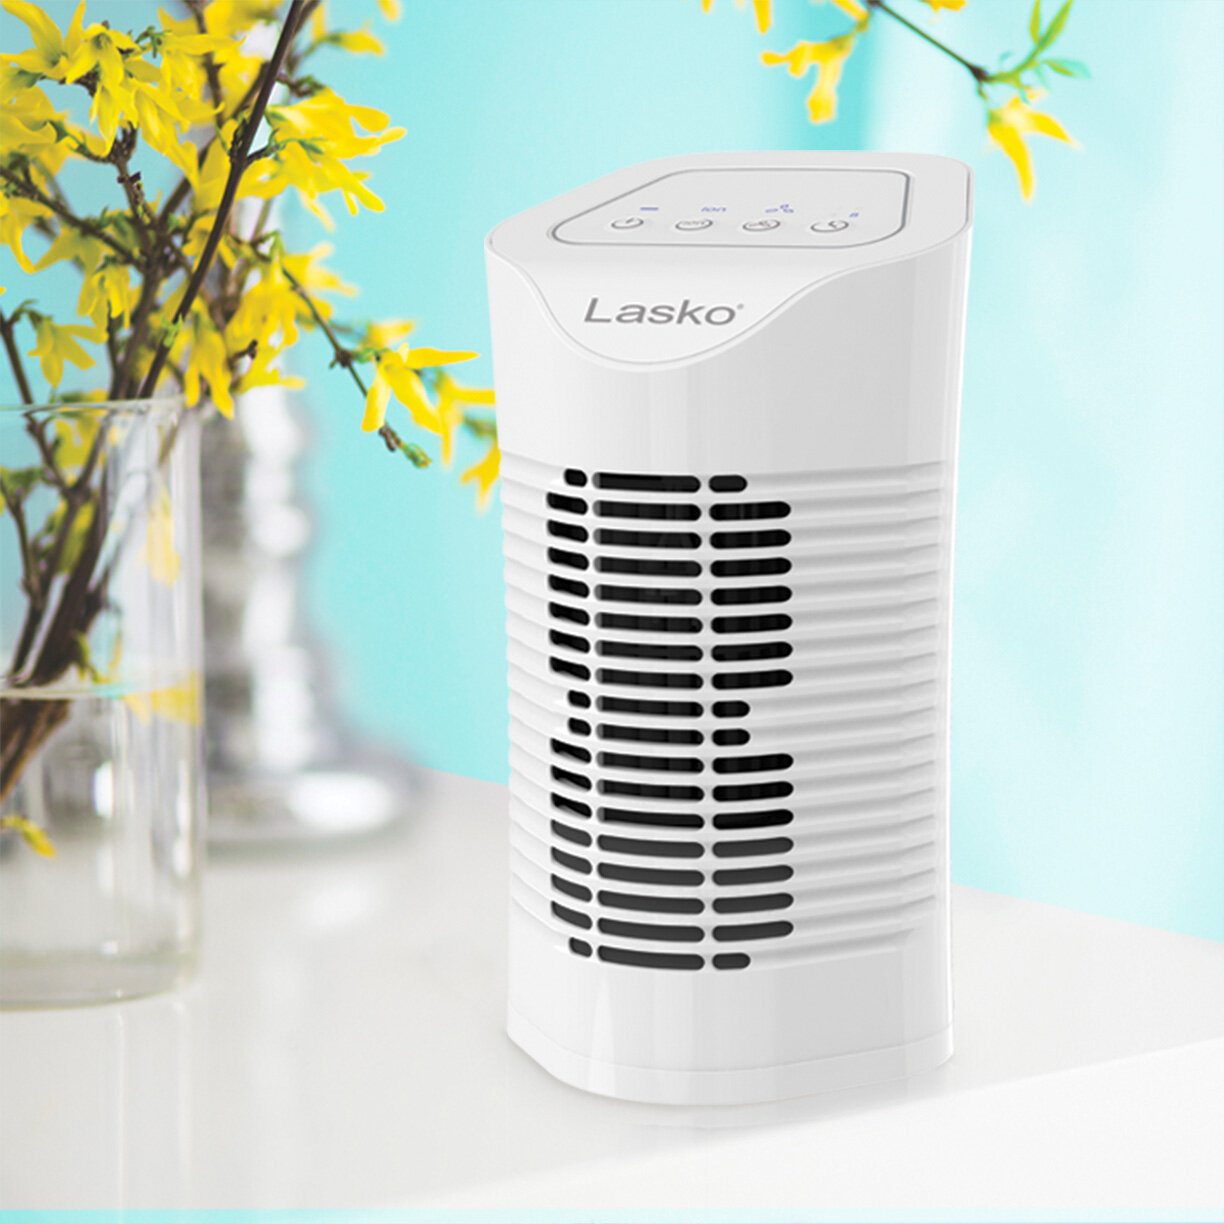 Lasko Desktop Air Purifier With 3 Stage Air Cleaning System Reviews Wayfair